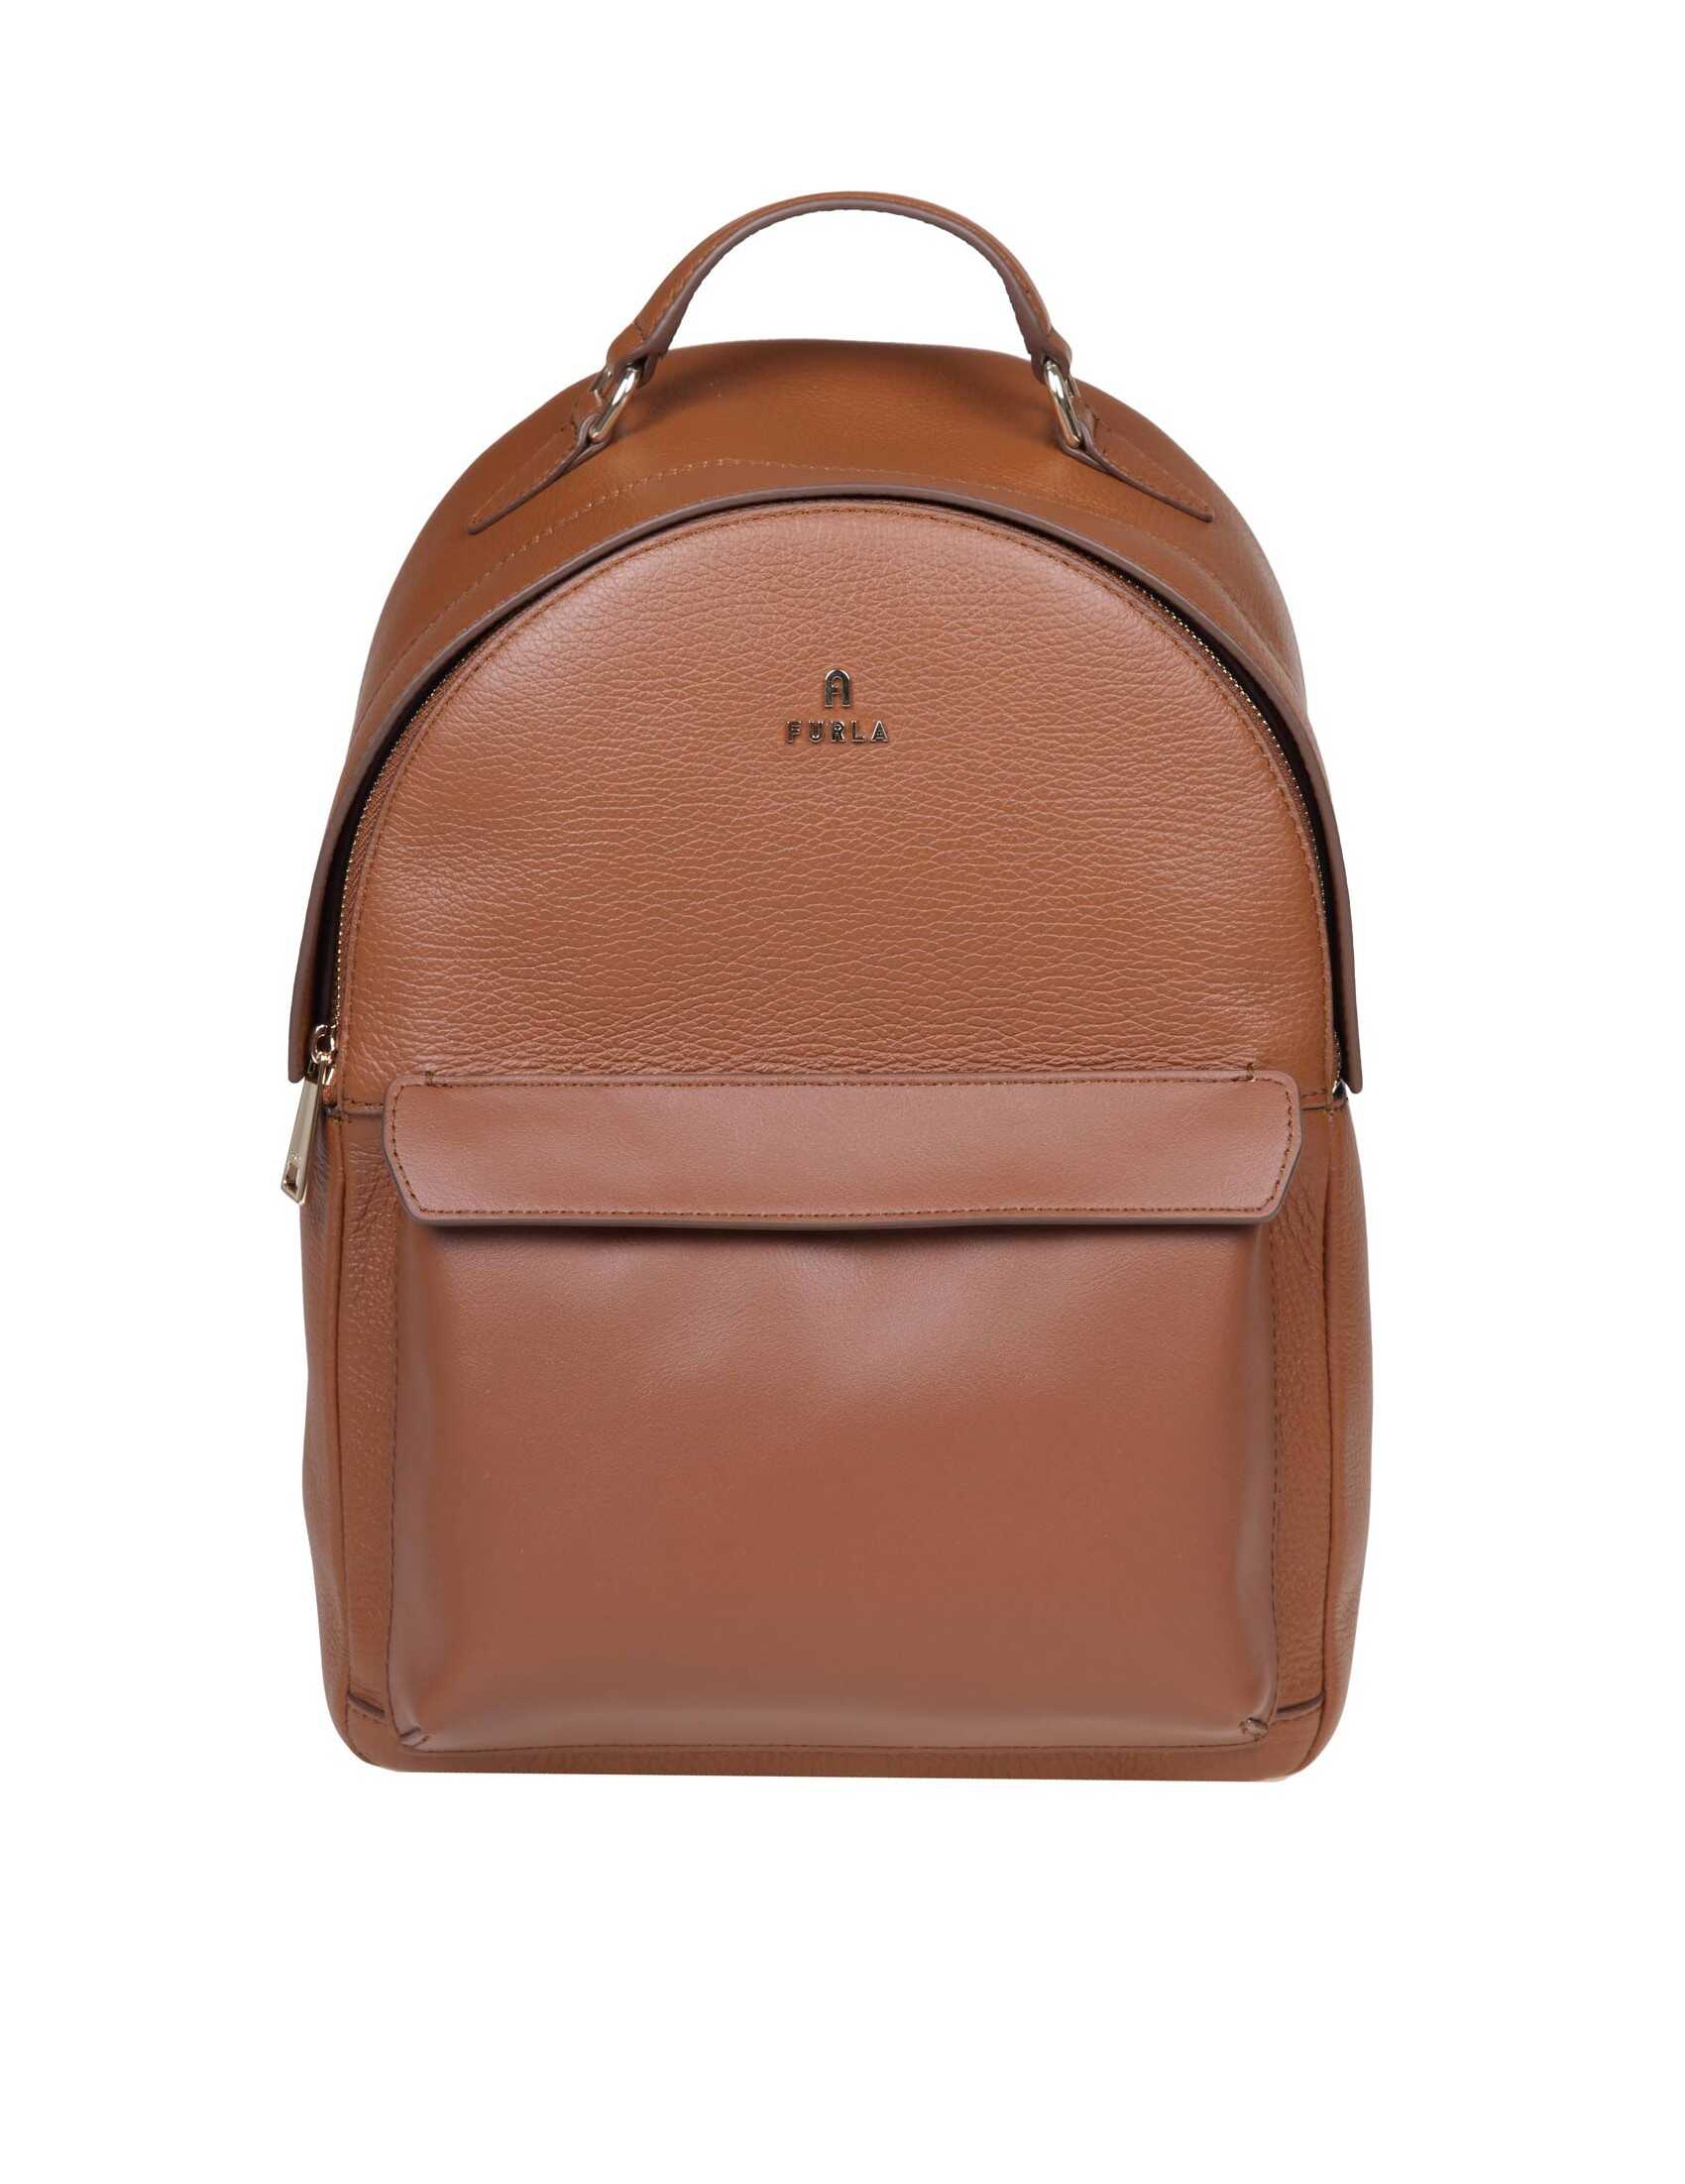 Furla Furla favola s backpack in cognac color leather Brown